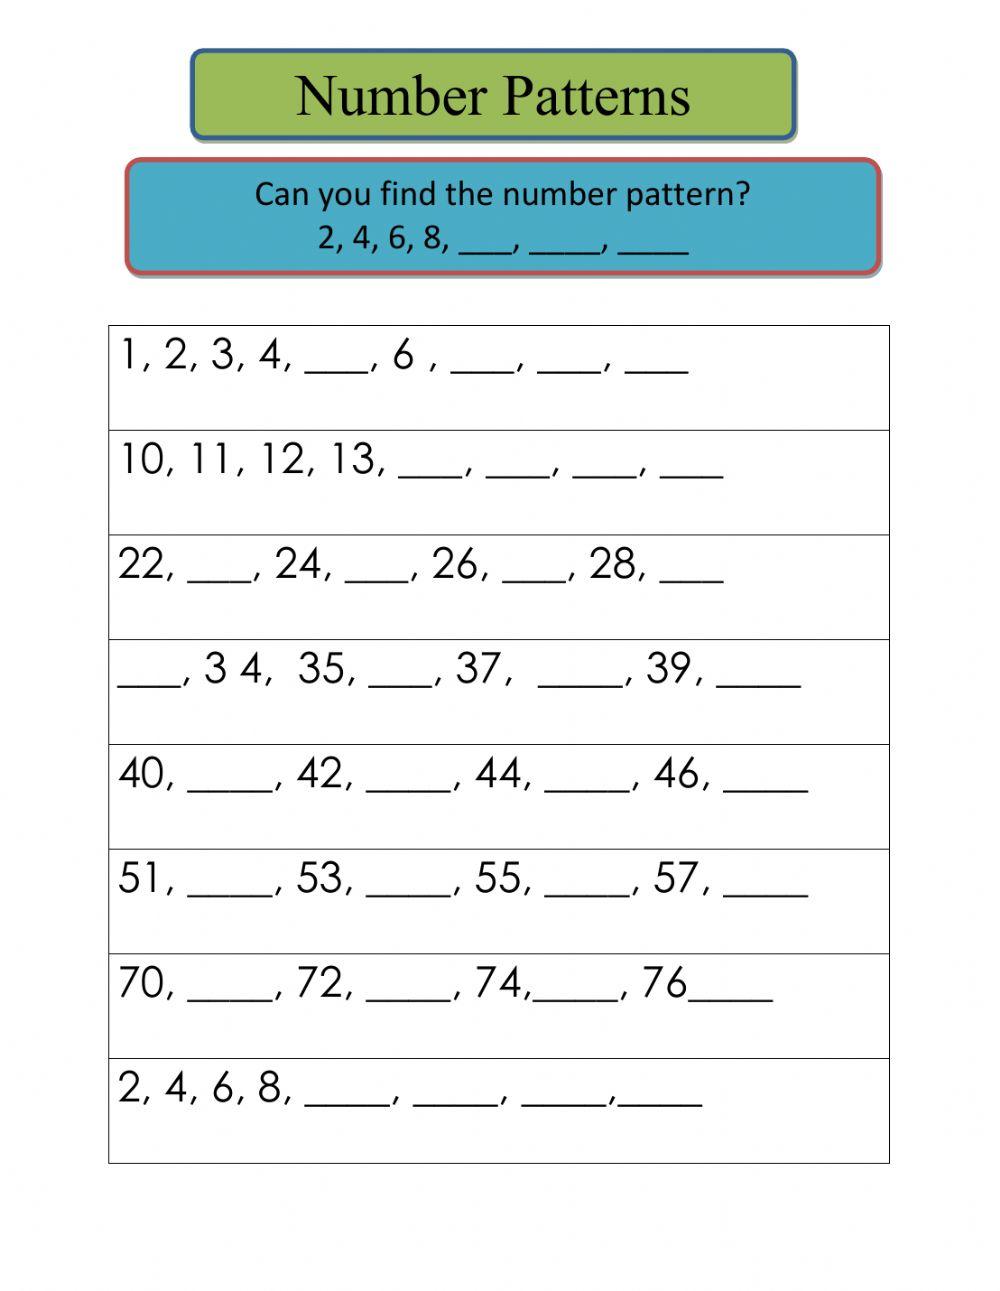 Number pattern